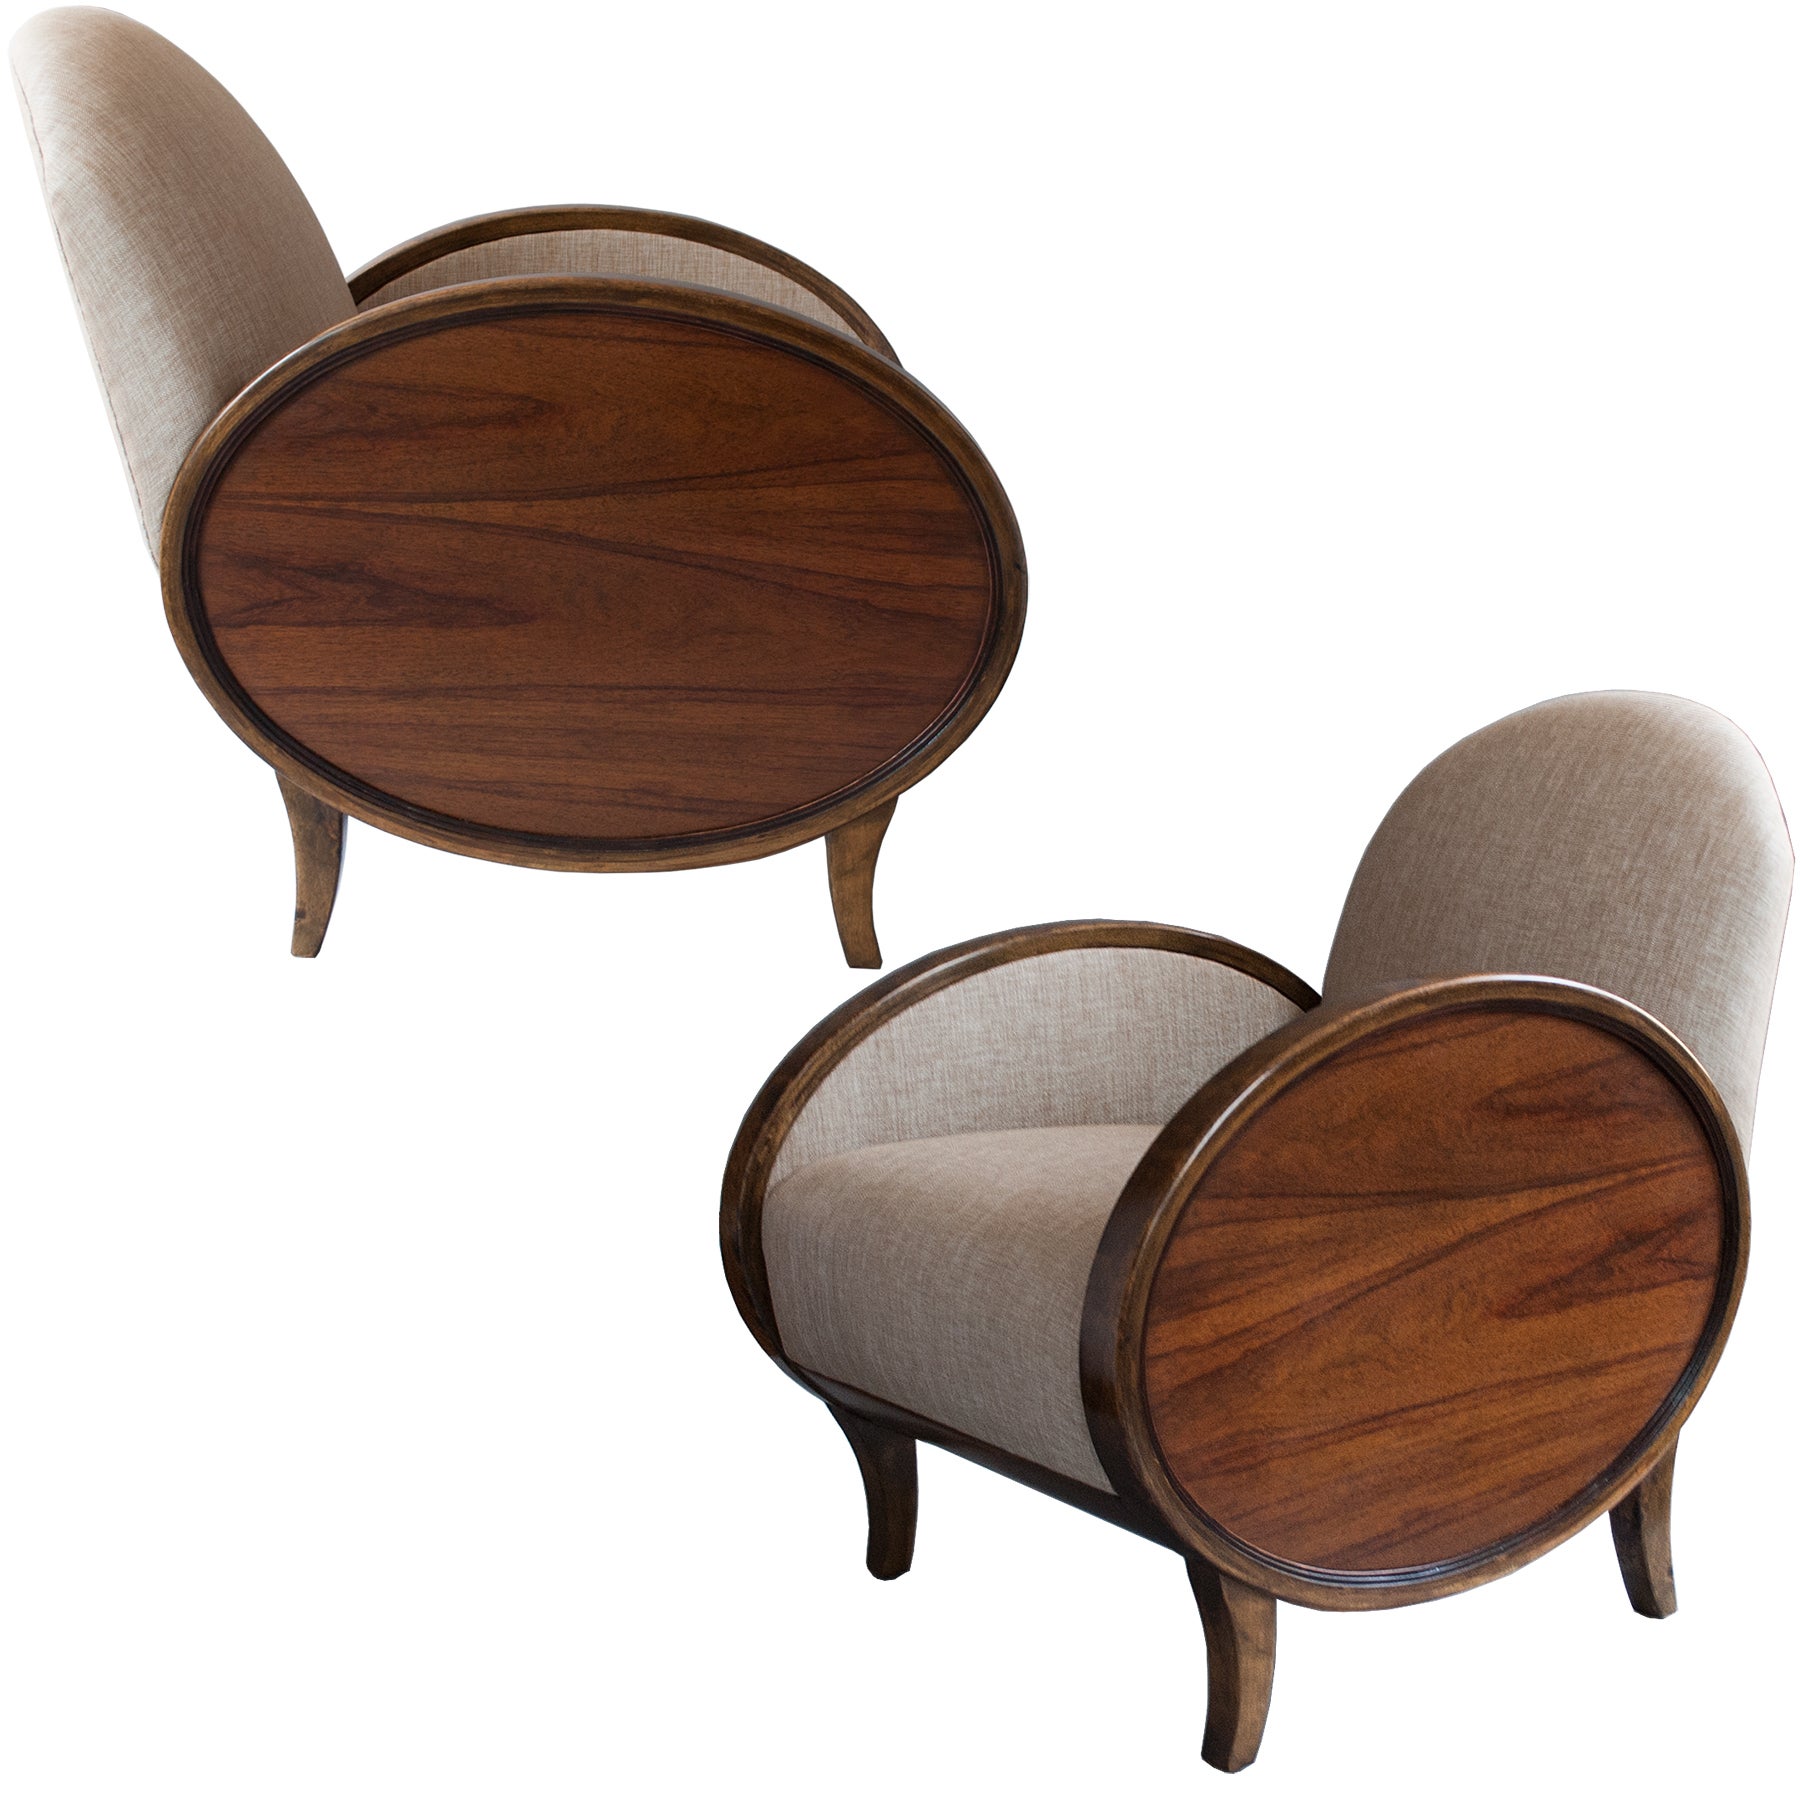 Scandinavian Modern Swedish Art Deco Chairs with Oval Rosewood Panels